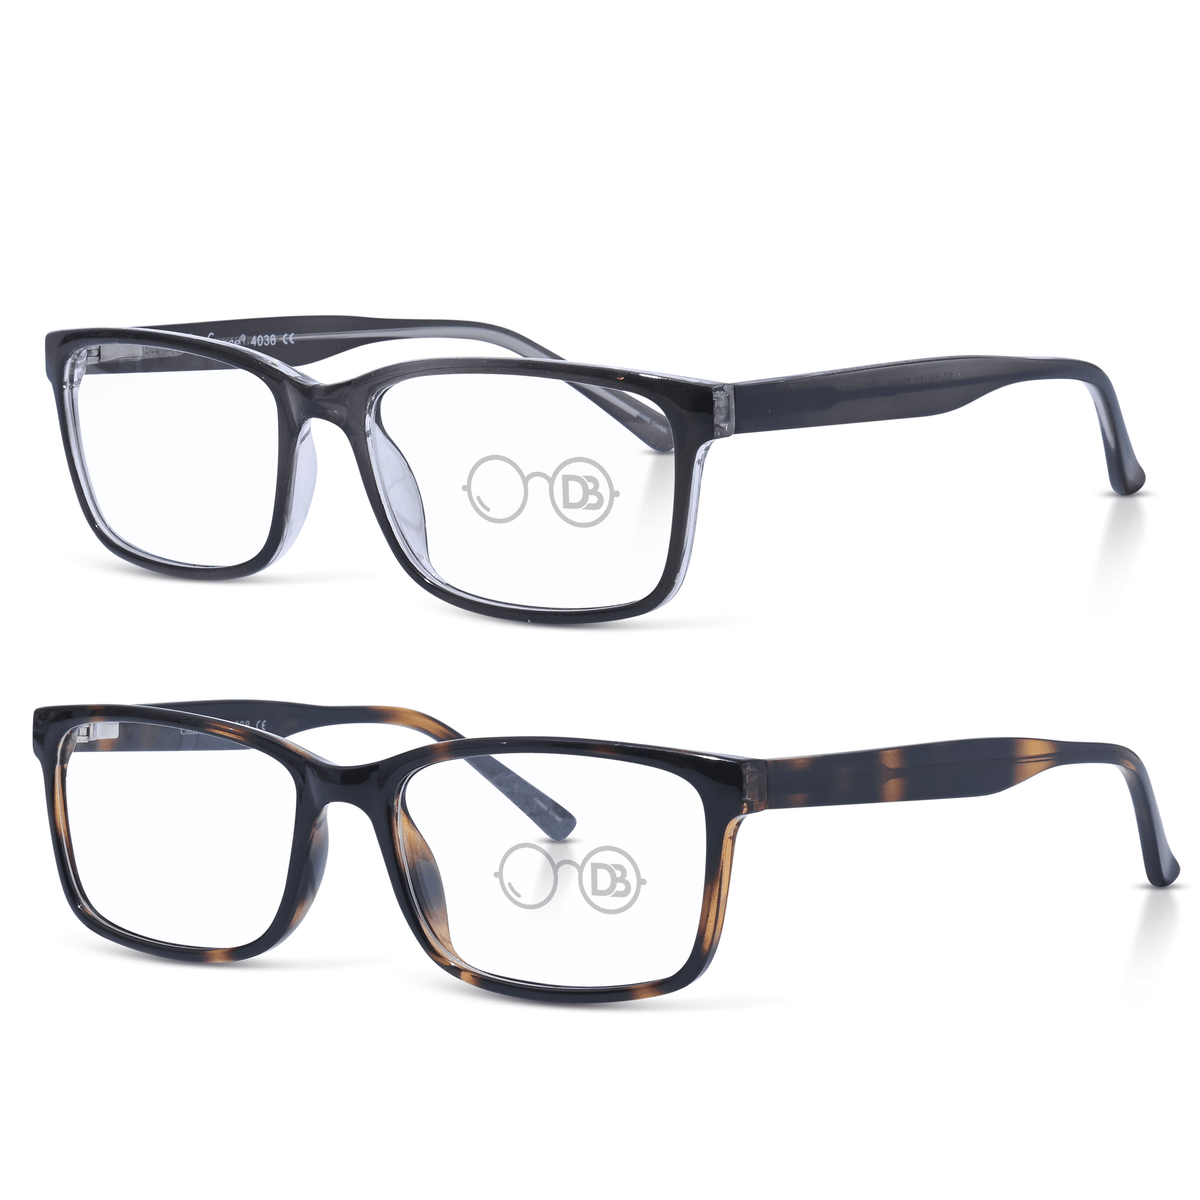 XXL Rectangle Bifocal Reading Glasses -Sharp